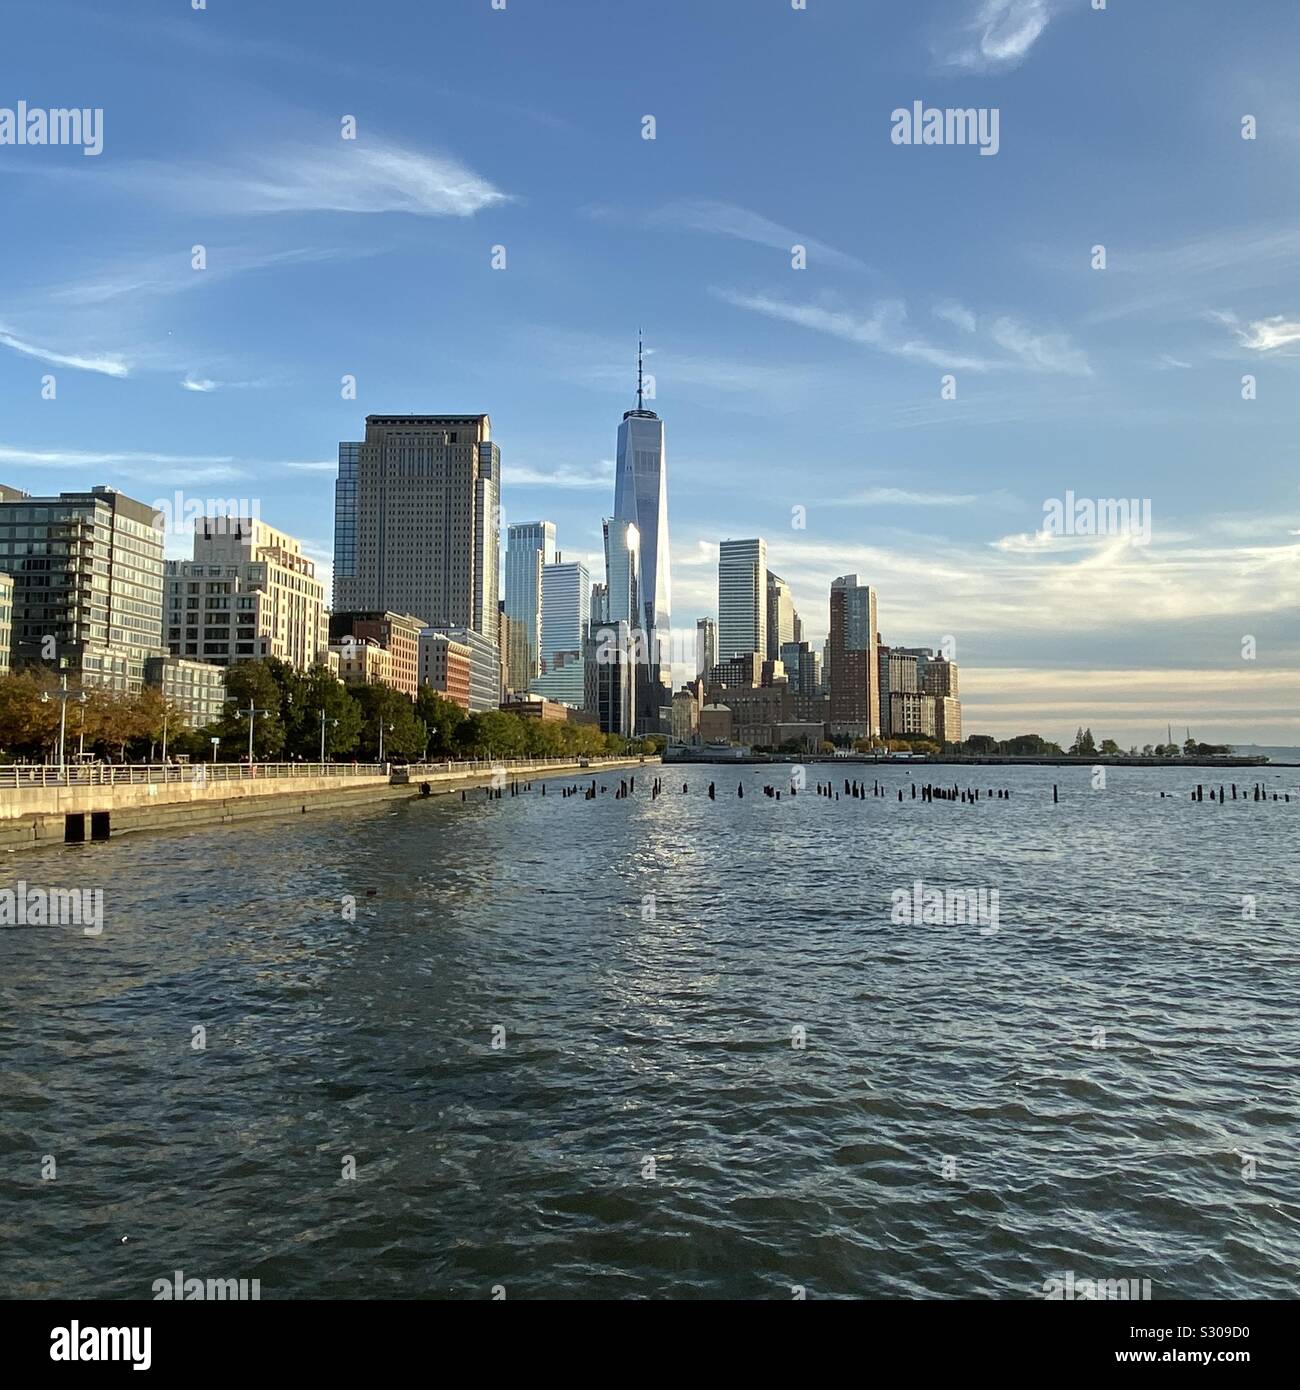 TriBeCa, Financial District, Hudson River, lower Manhattan, New York City, USA Stock Photo